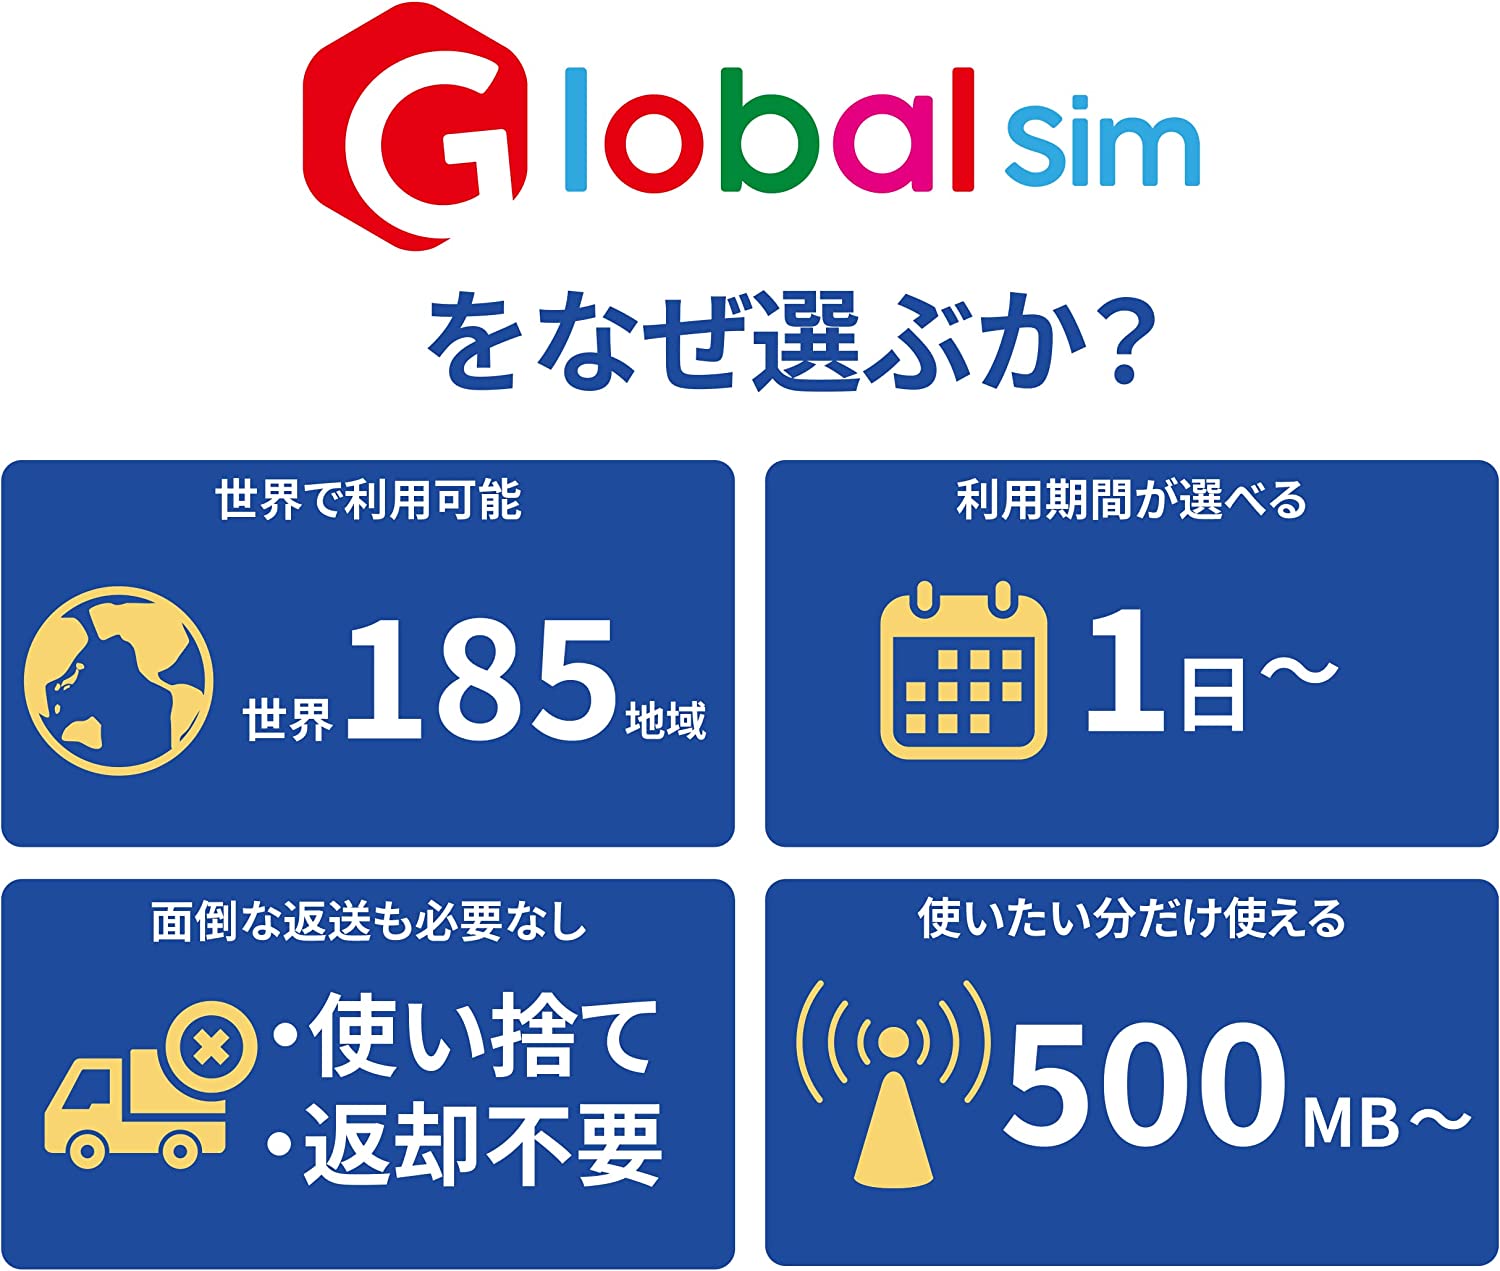 GLOBAL SIM ベトナム6日間 データ無制限 (2GB 日高速）（容量を使い切っても利用期間内は最大384kbps） データ通信専用 シムフリー端末のみ対応 追加費用なし・契約不要